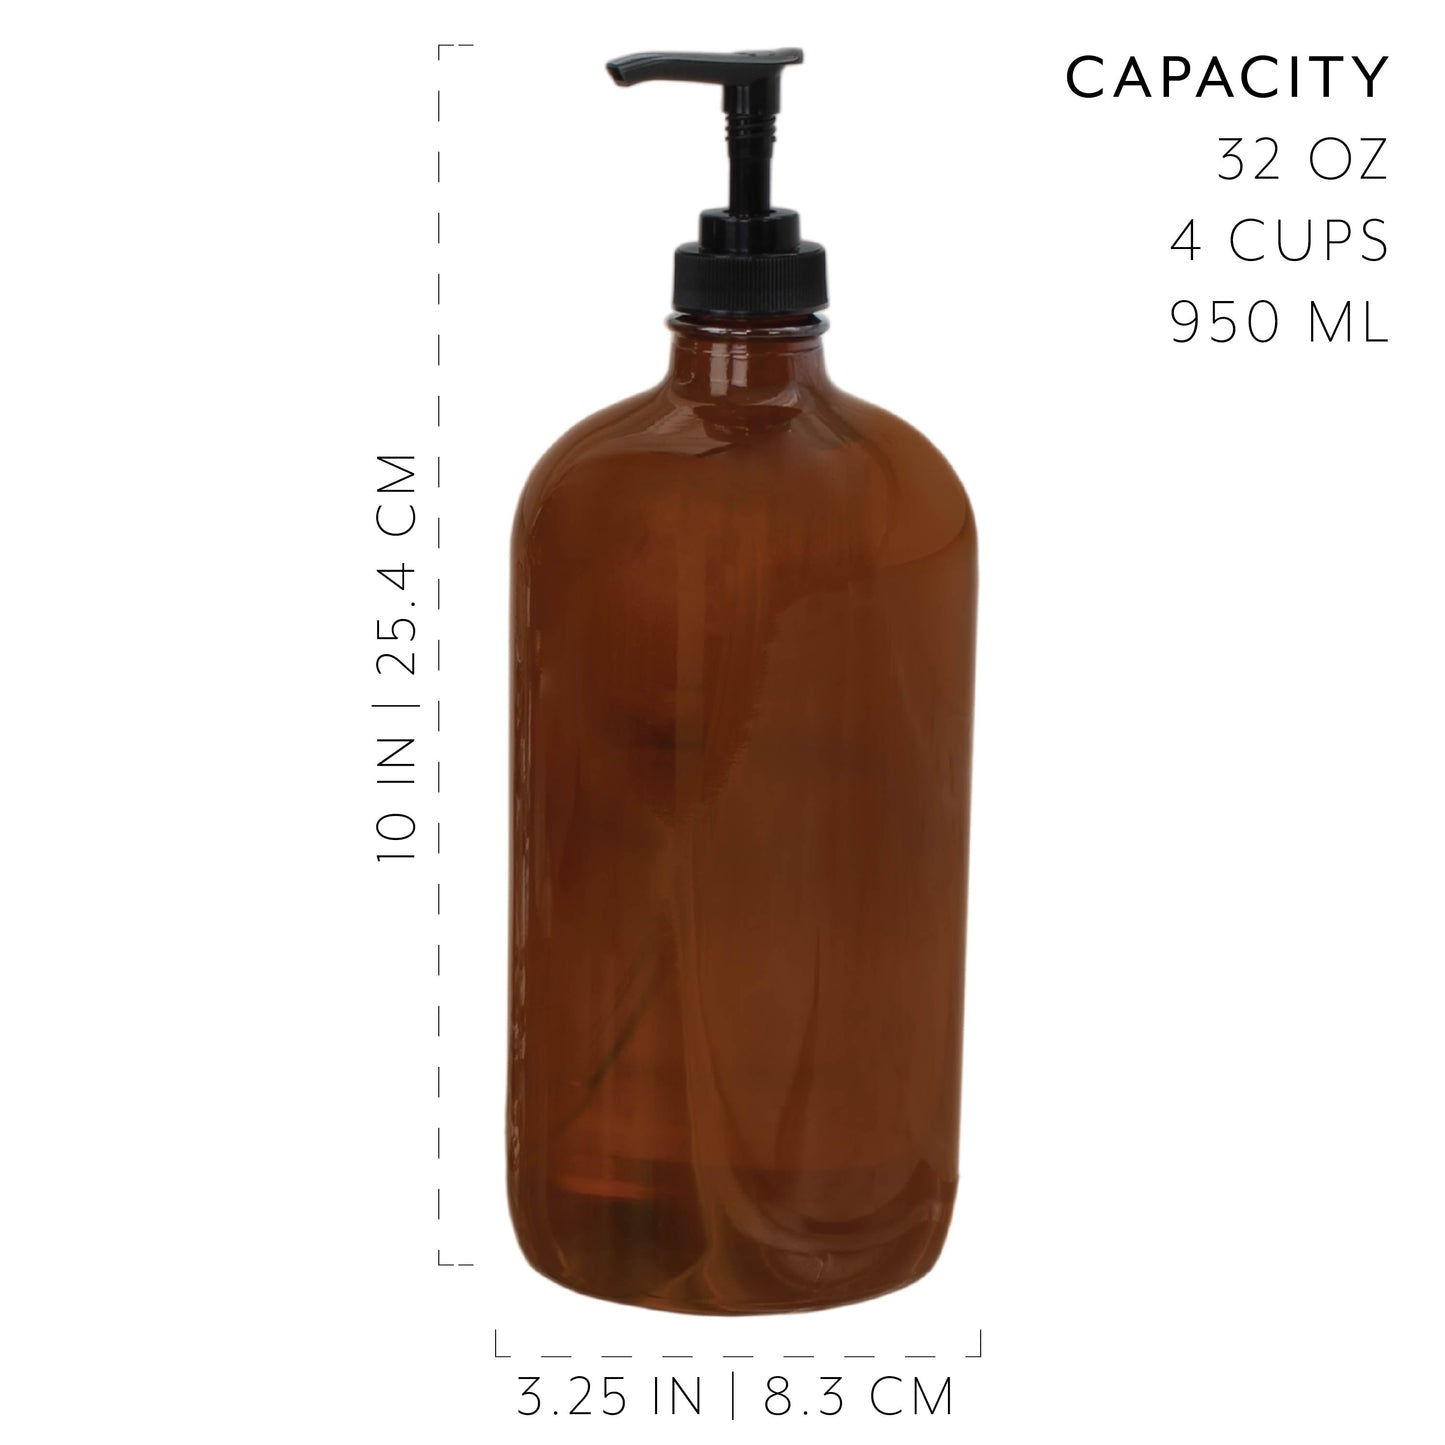 32oz Amber Glass Lotion Pump Bottles (2-Pack) - sh1425cb032oz